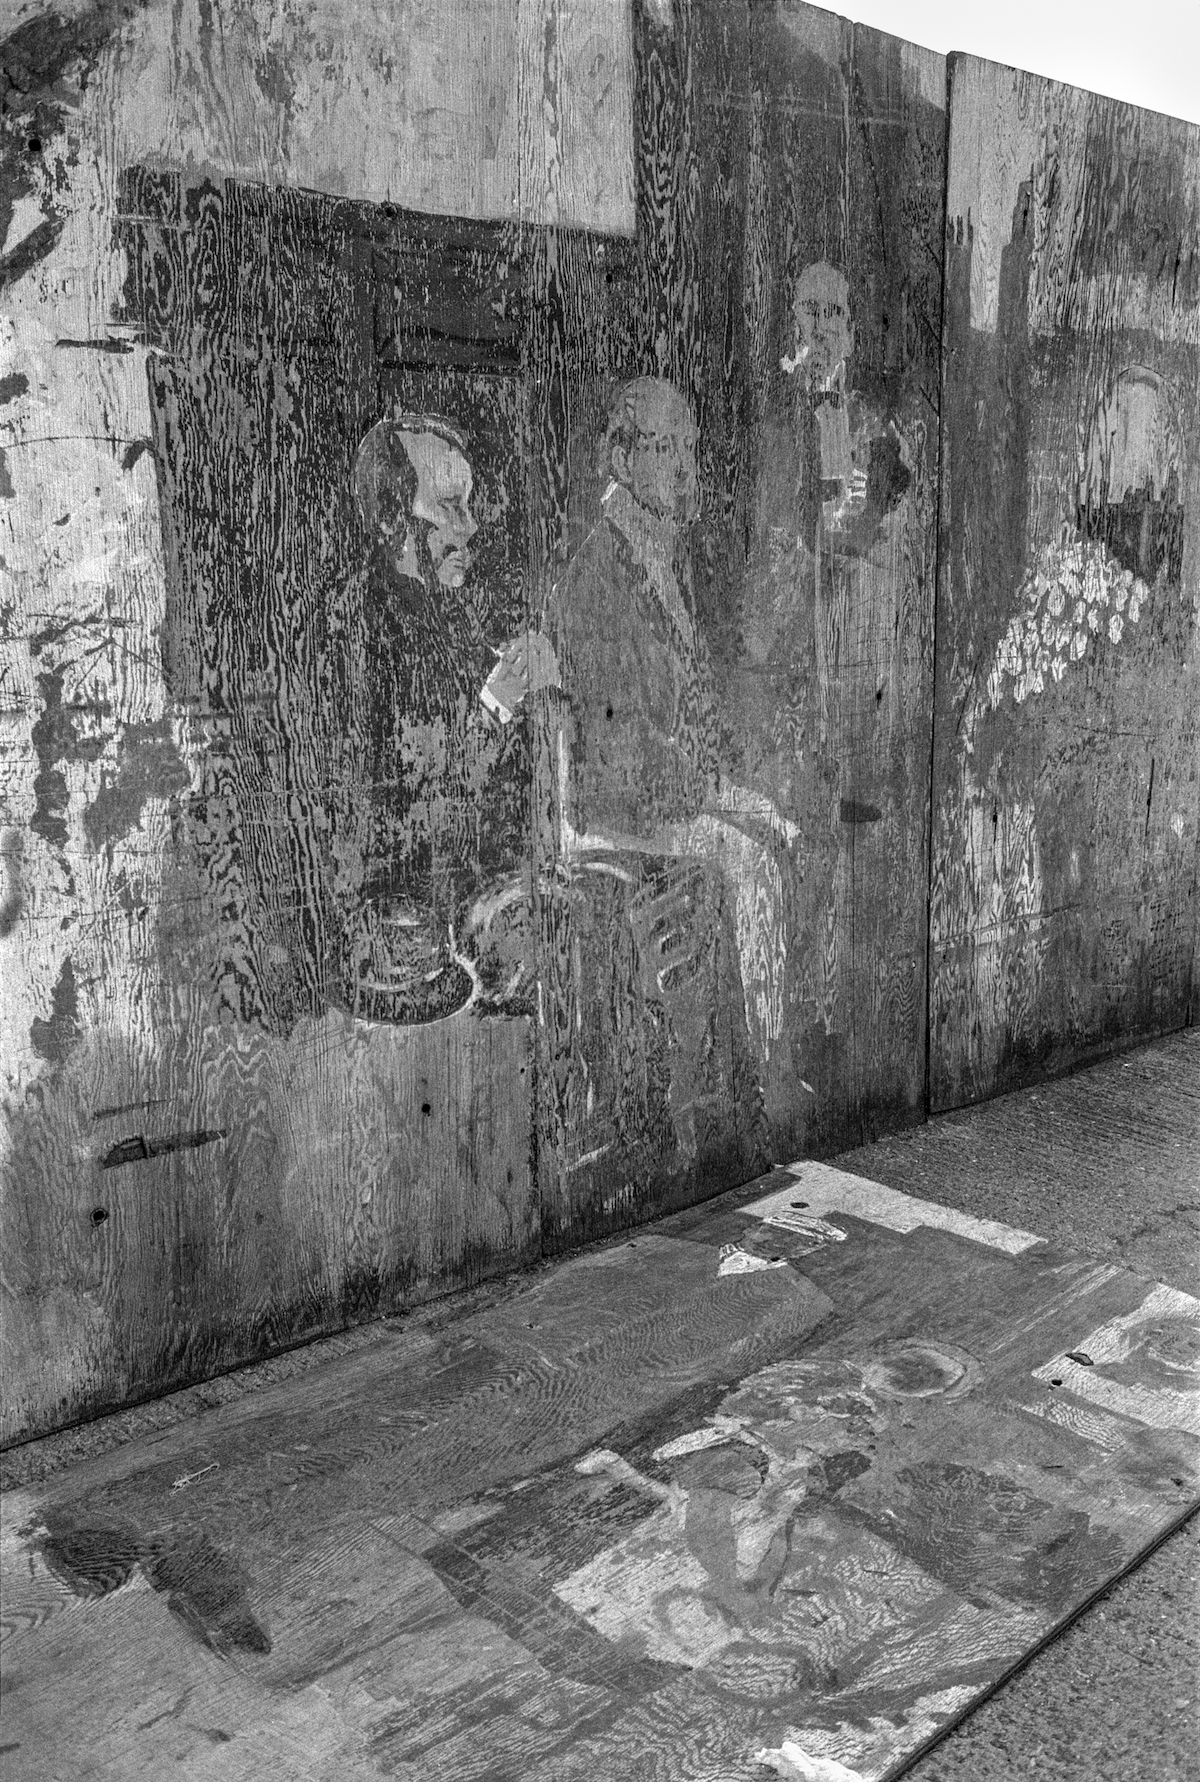 FOTOS DE VAUXHALL SUL DE LONDRES NOS ANOS 80 Artes & contextos Graffiti Kennington Lambeth. 1982